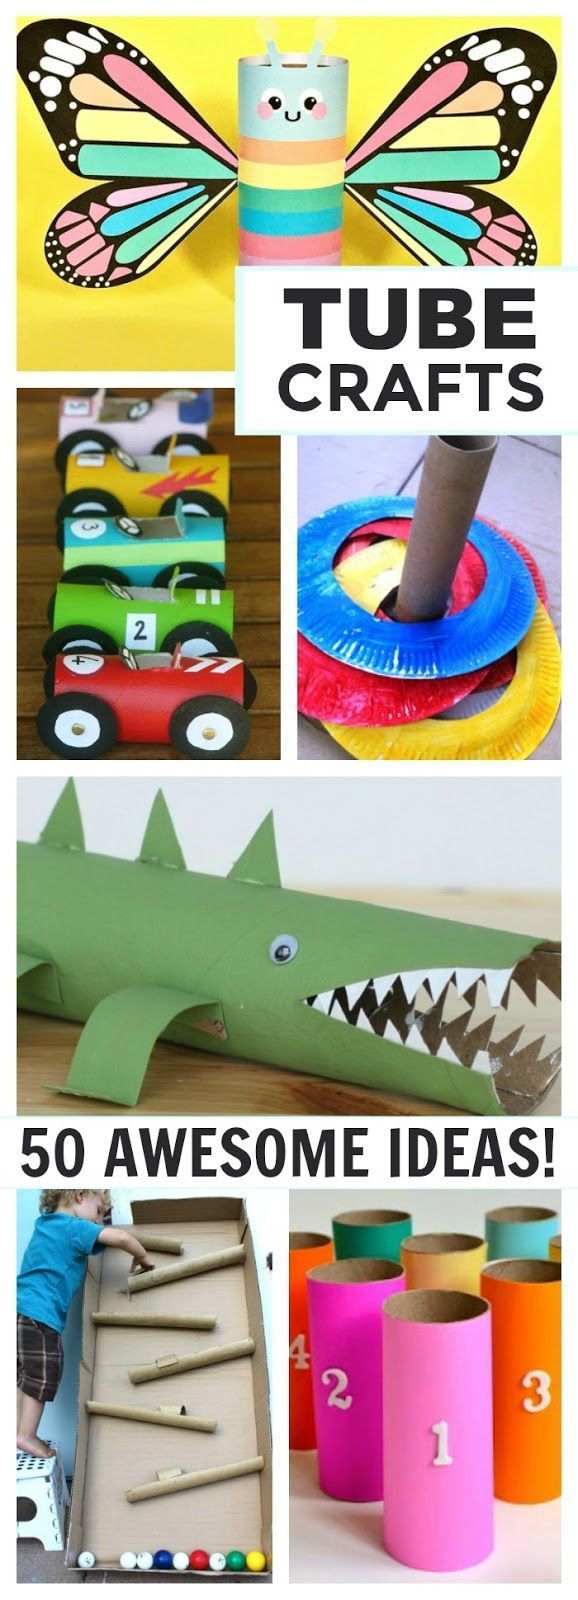 Cardboard Tube Crafts for Kids -   24 cardboard crafts for boys ideas